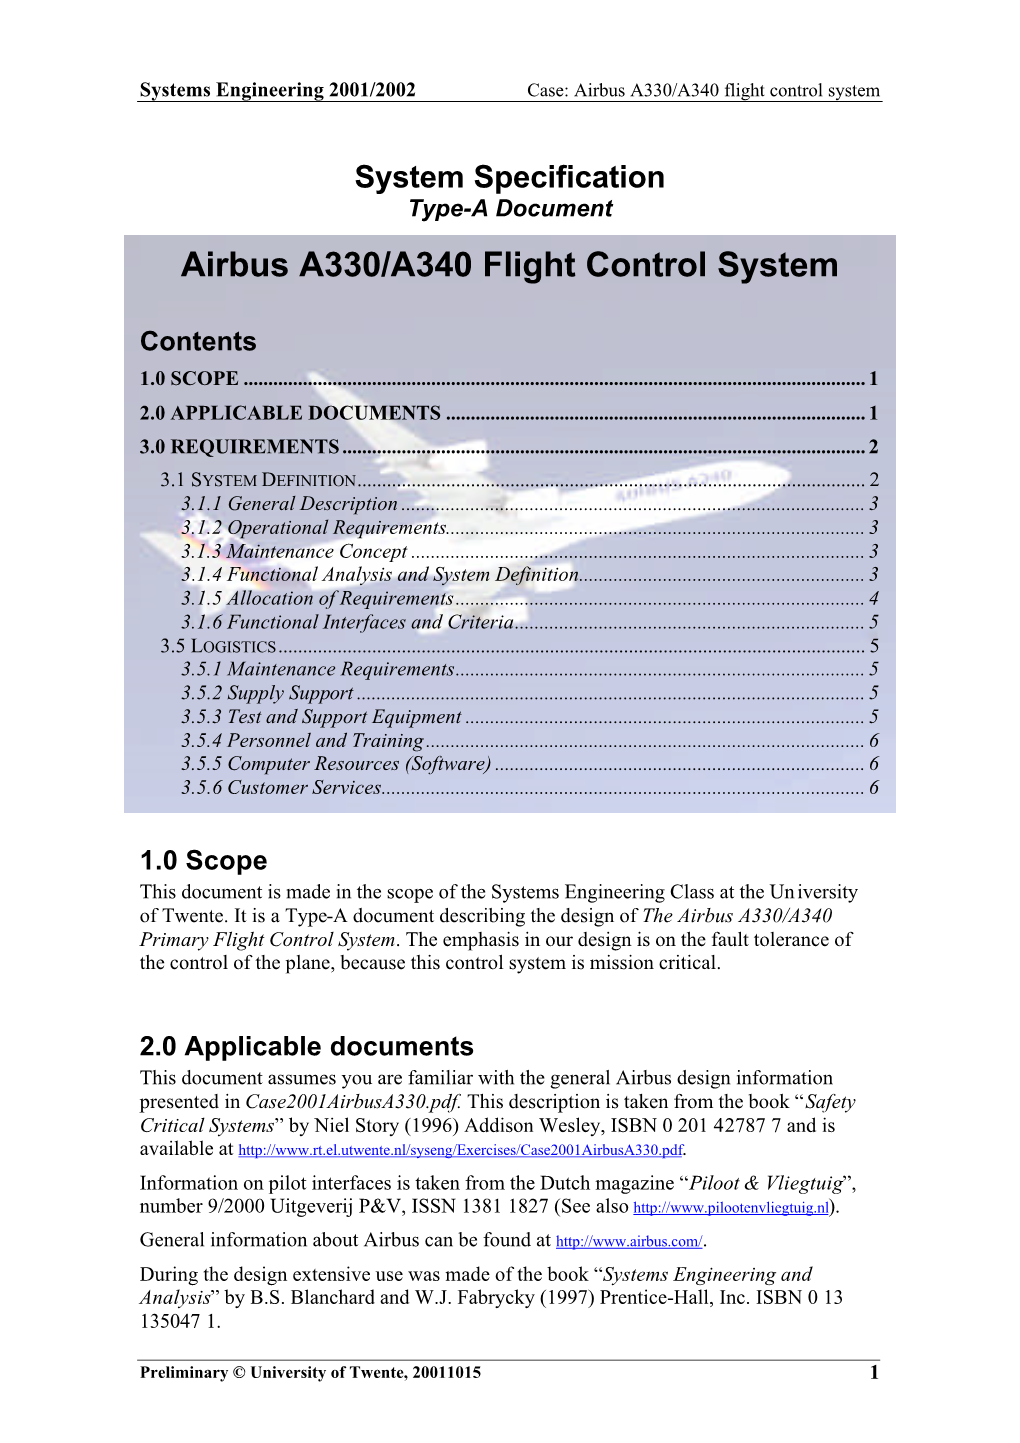 Airbus A330/A340 Flight Control System